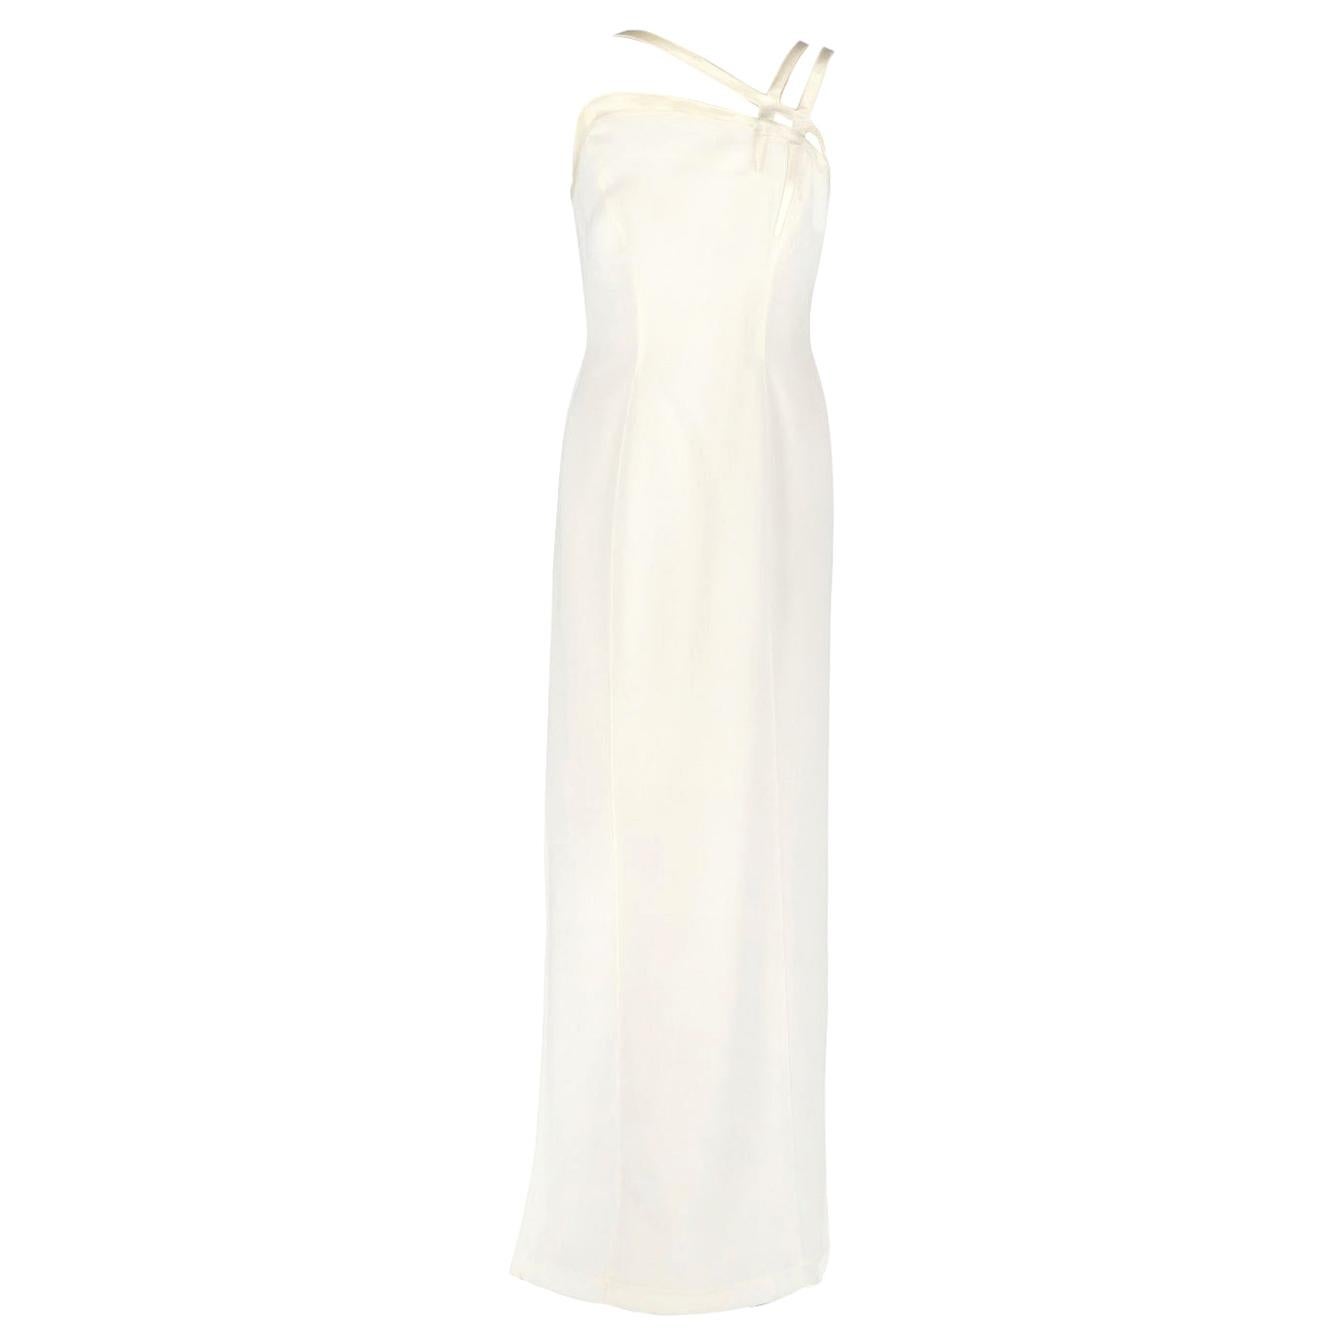 Thierry Mugler Ivory White Vintage Wedding Dress, 1990s